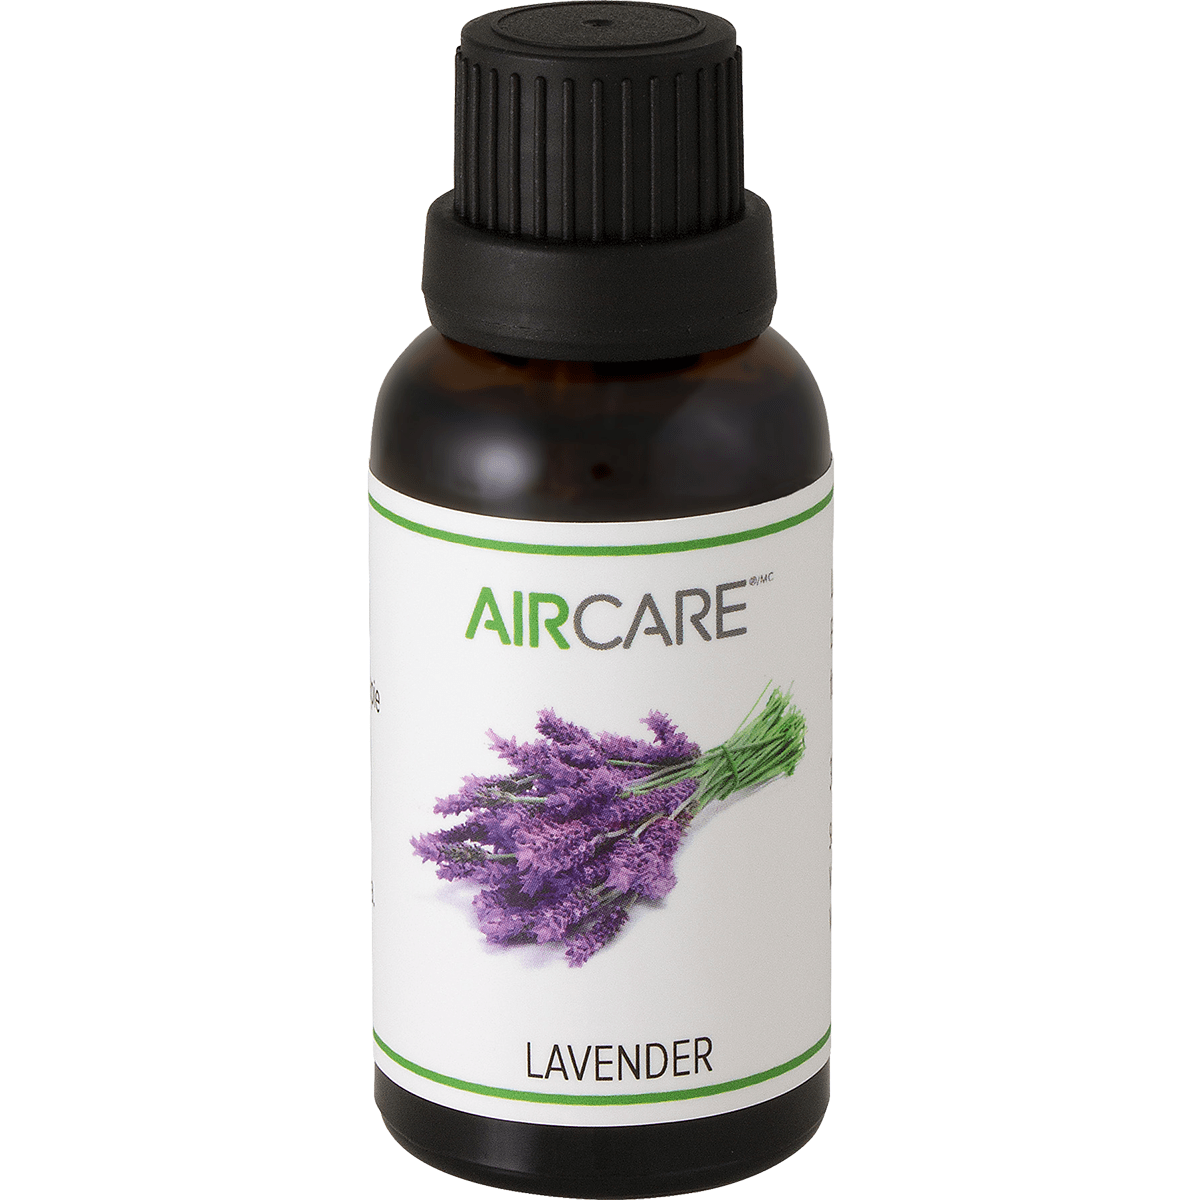 AIRCARE Lavender Essential Oil